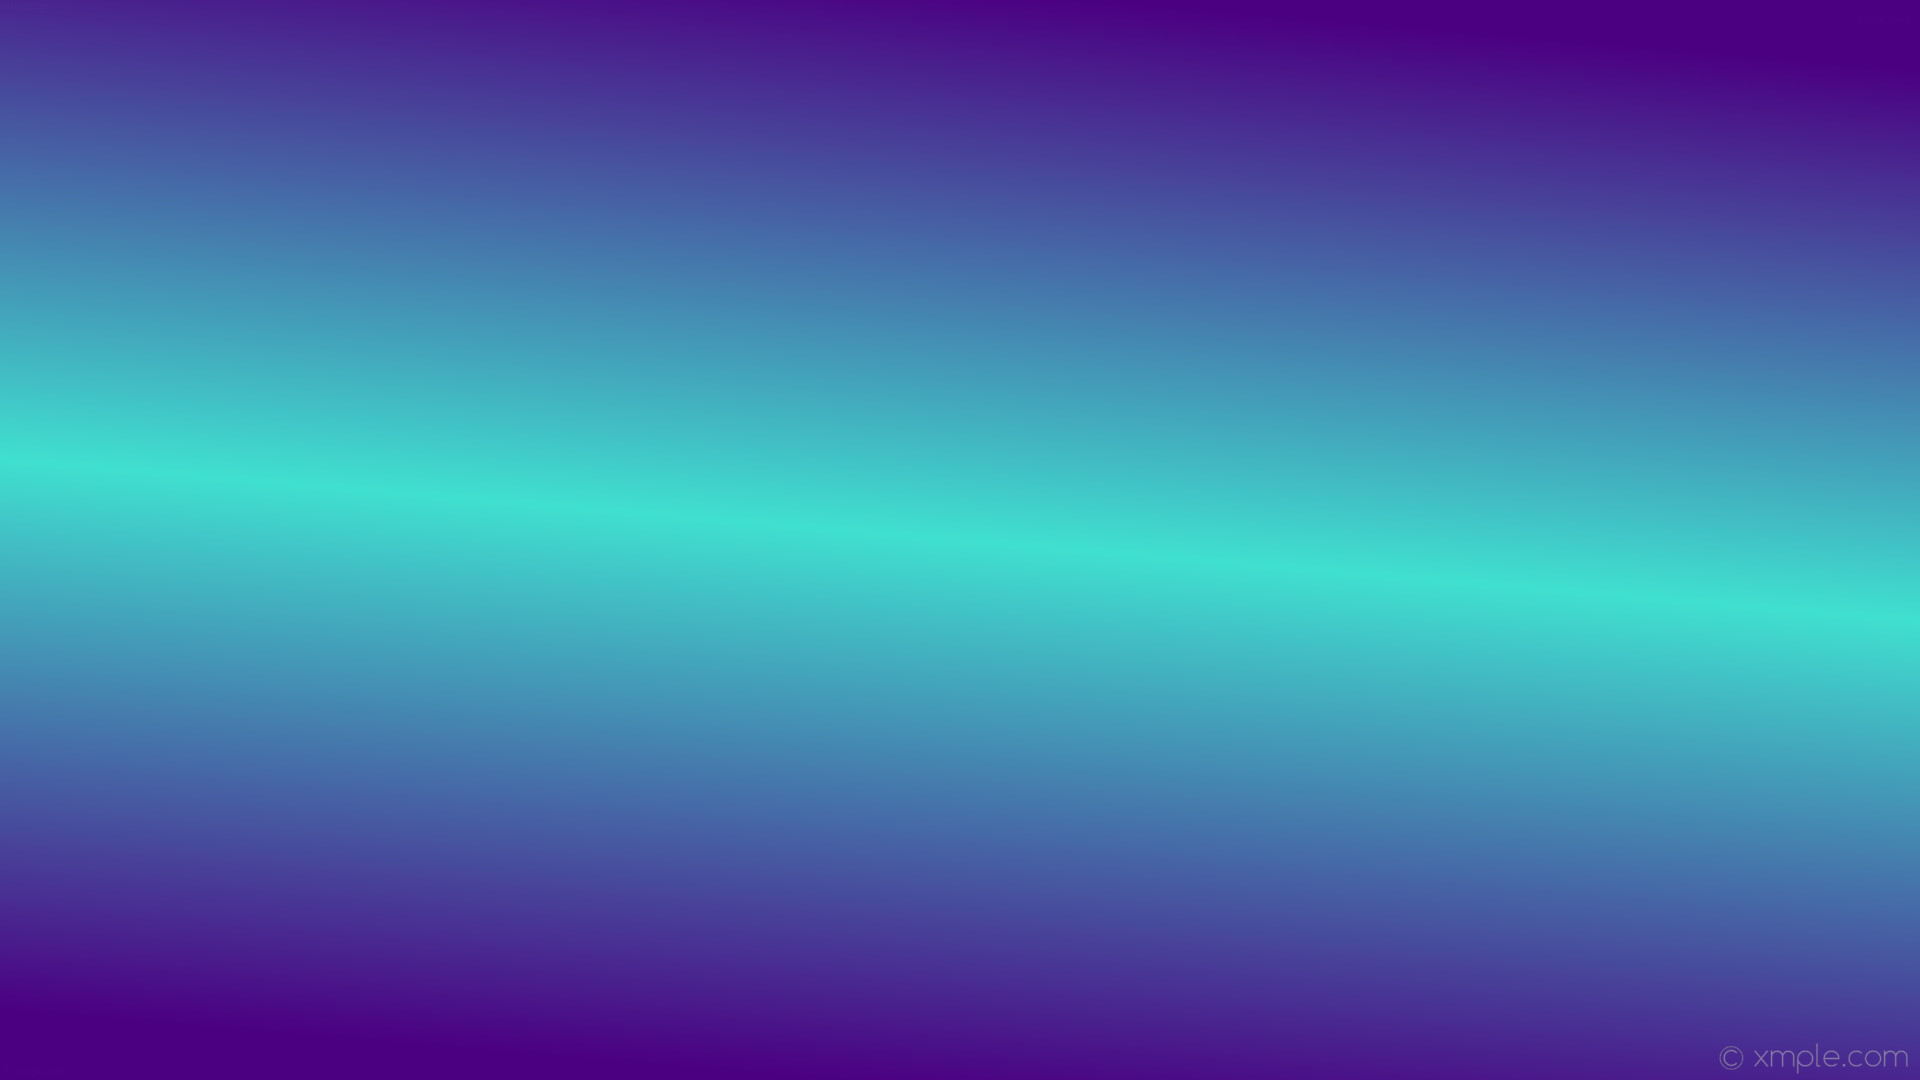 1920x1080 wallpaper linear purple gradient blue highlight indigo turquoise #4b0082  #40e0d0 75Â° 50%